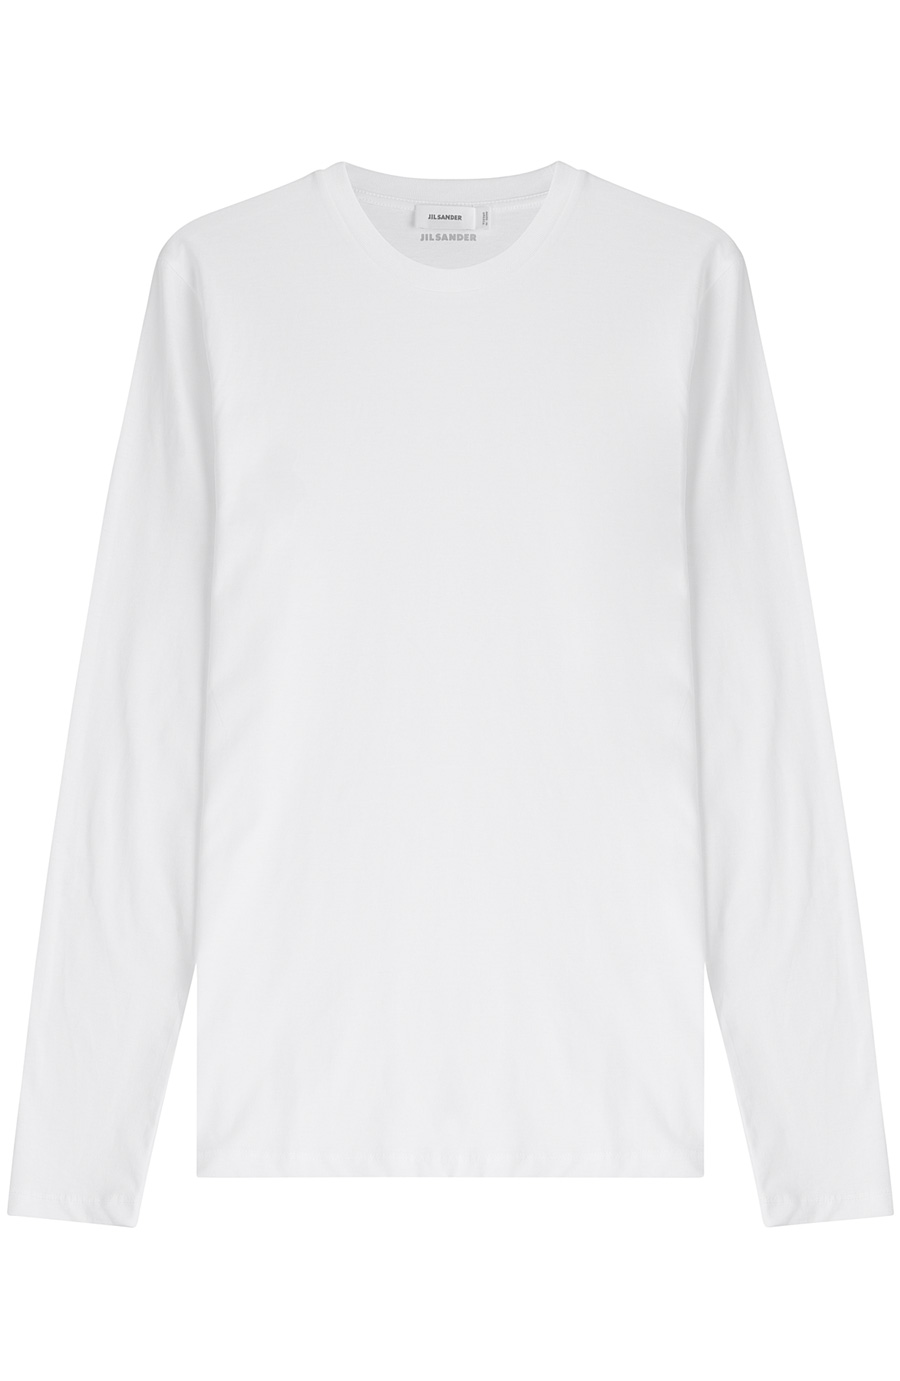 Jil Sander Long Sleeved Cotton Top | ModeSens